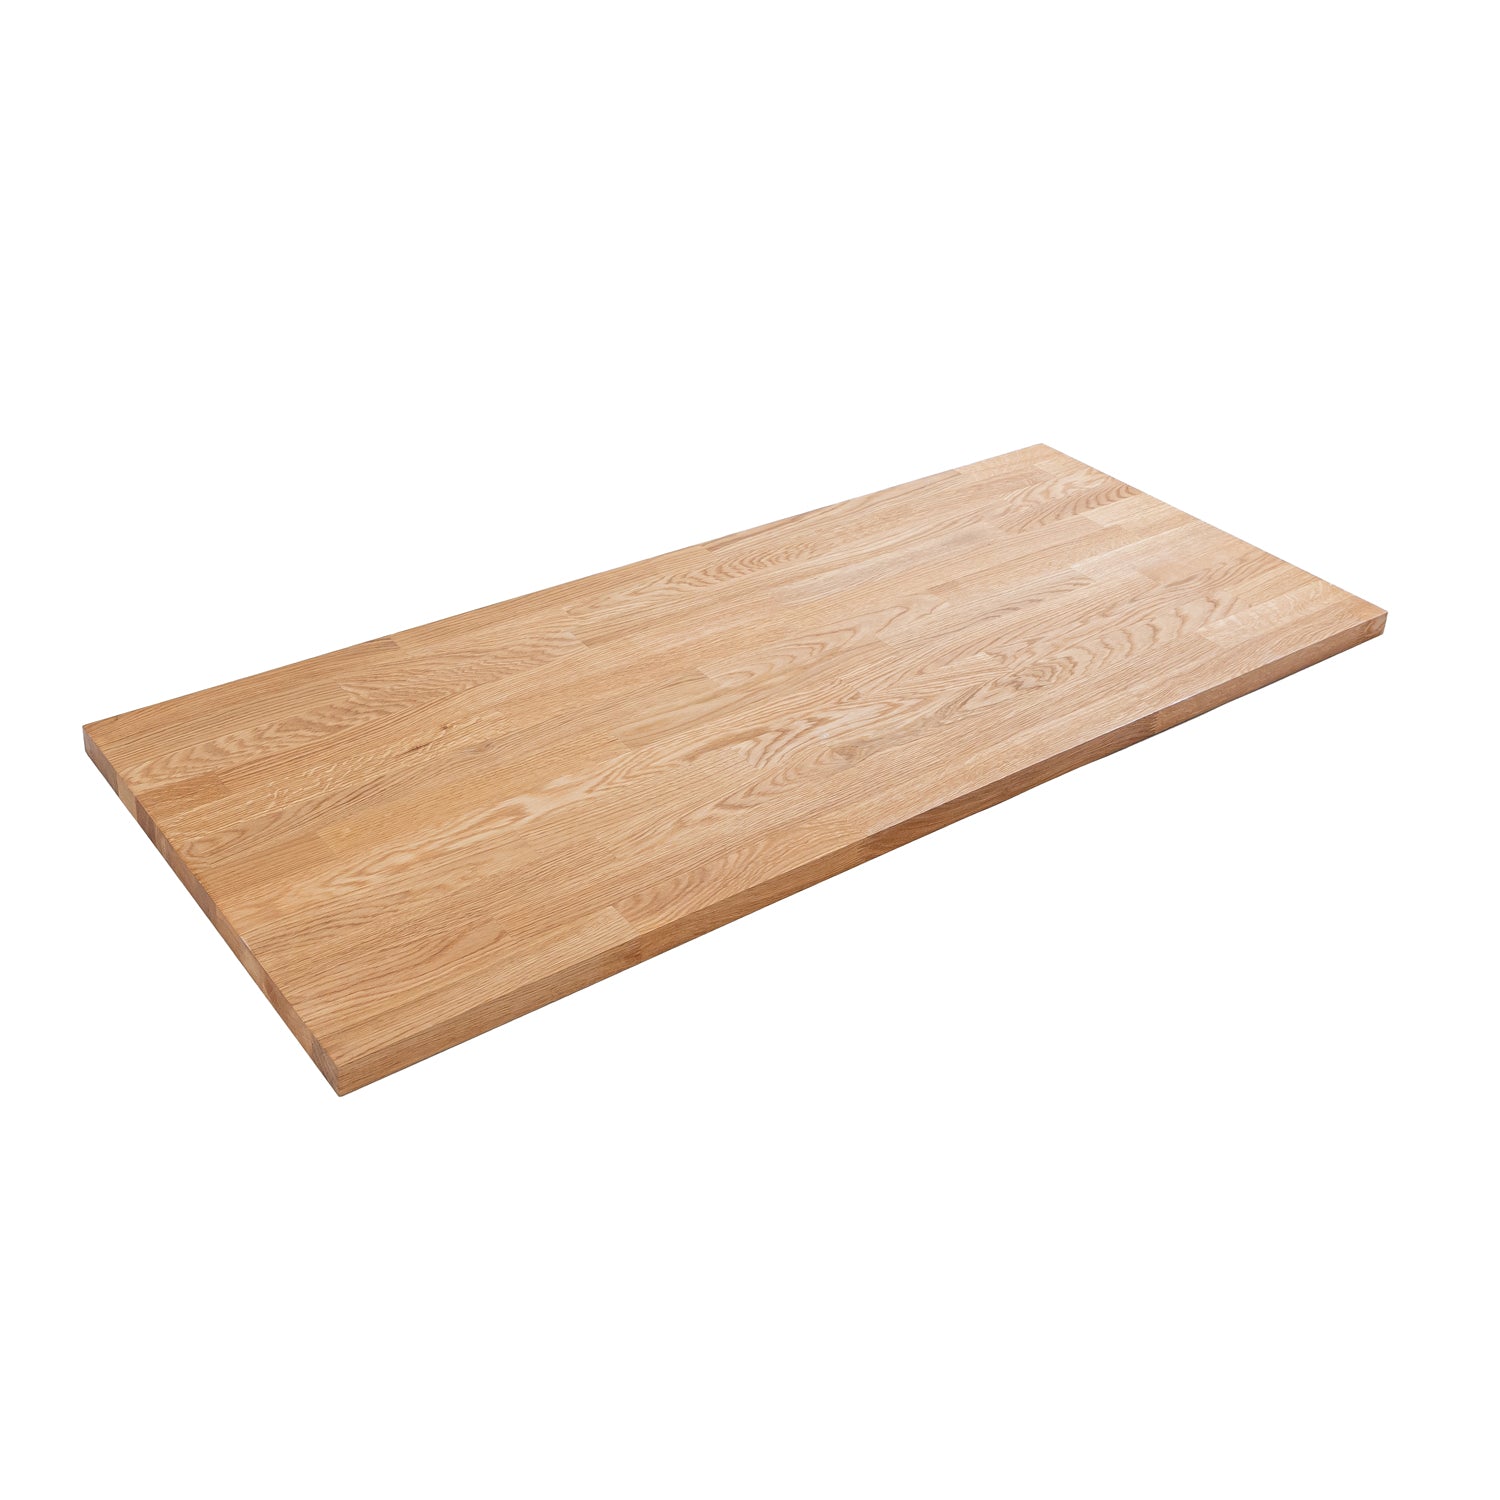 Oak Solid Wood Tabletop